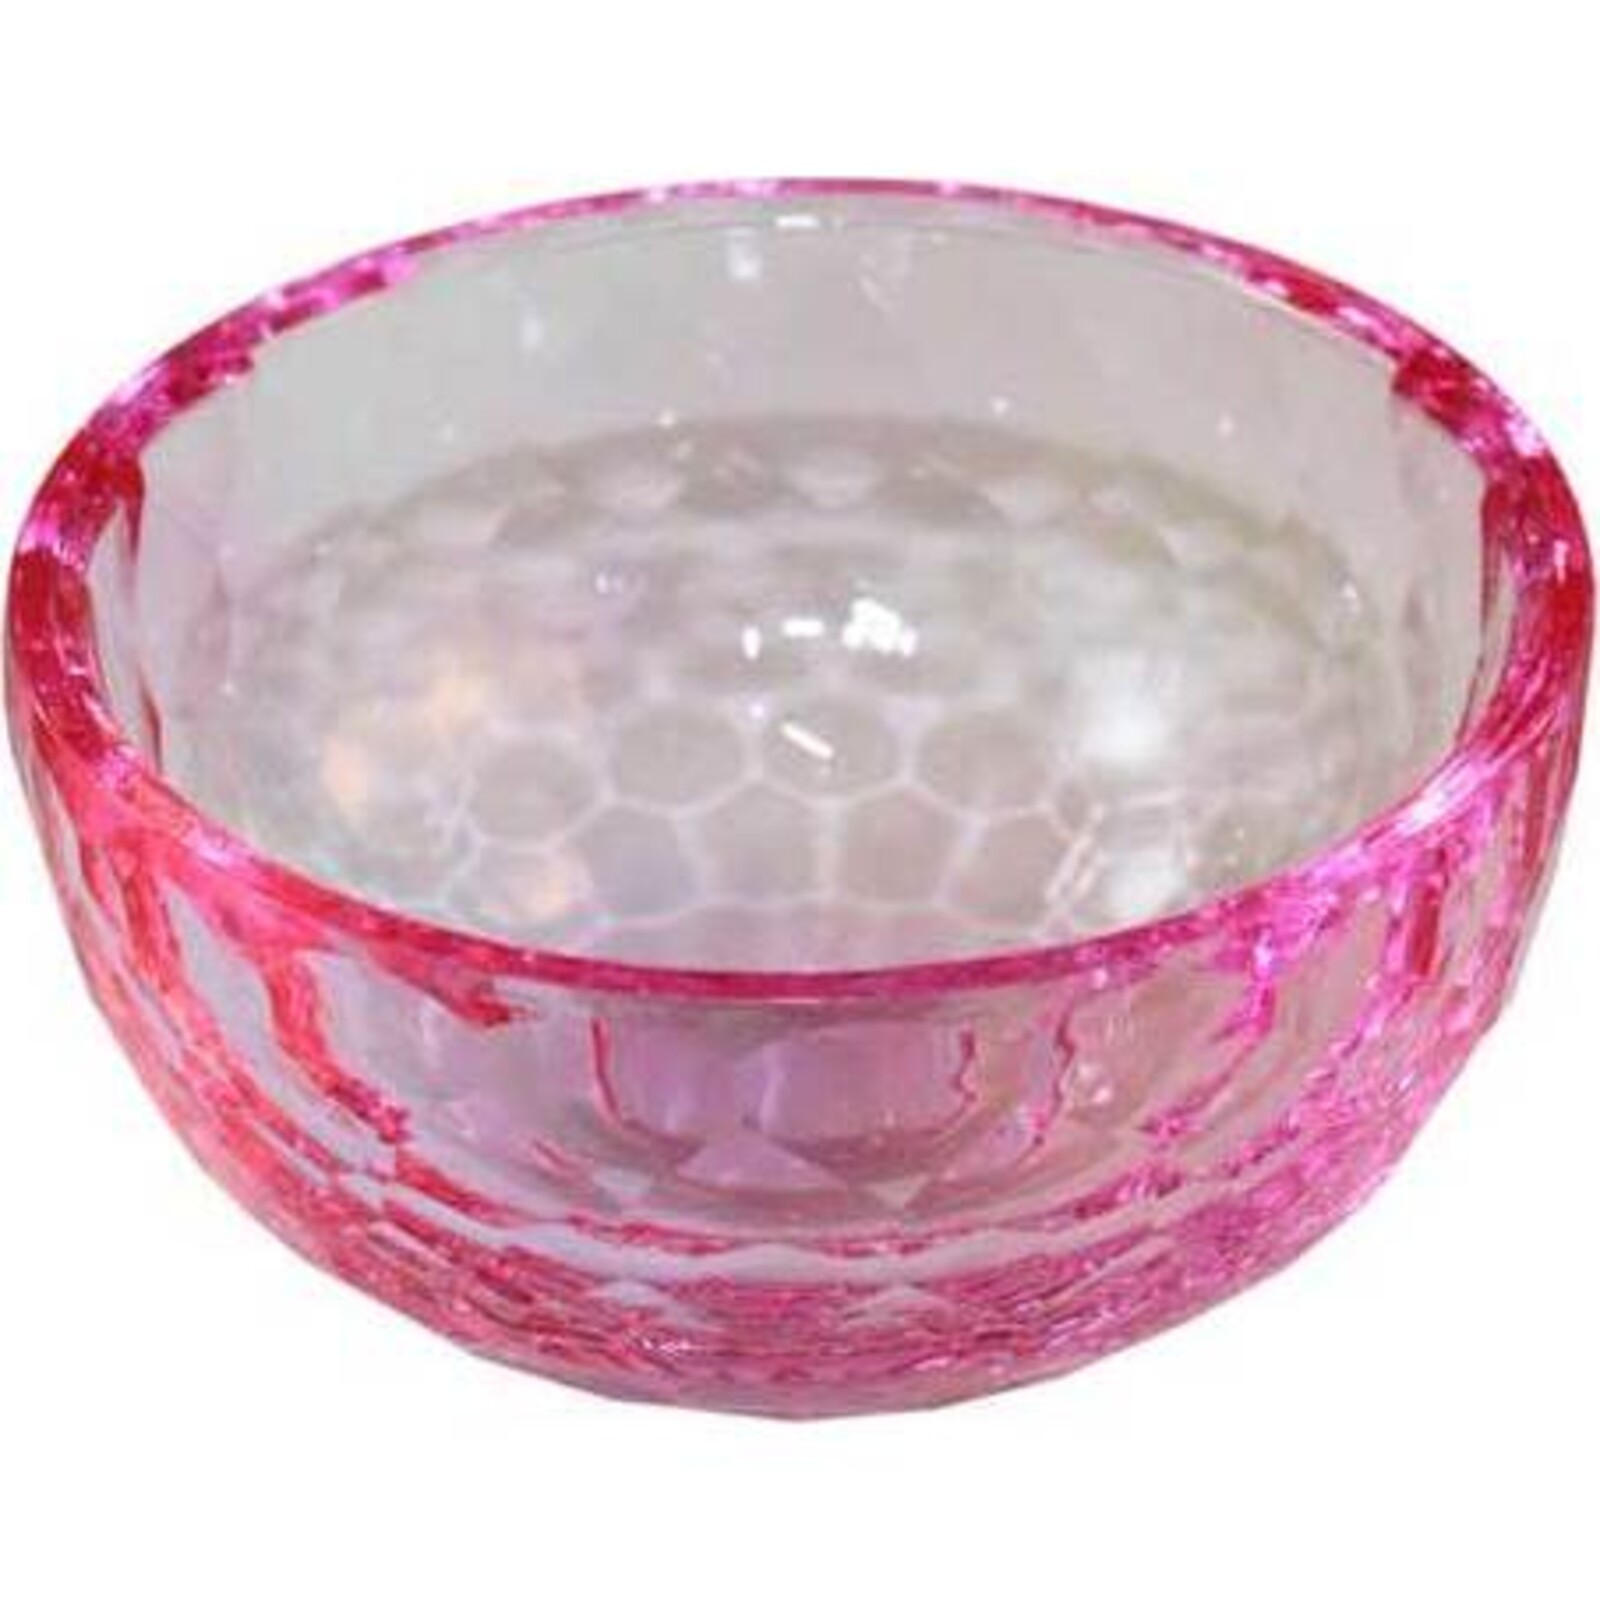 Cristal Bowl Votive - Pink